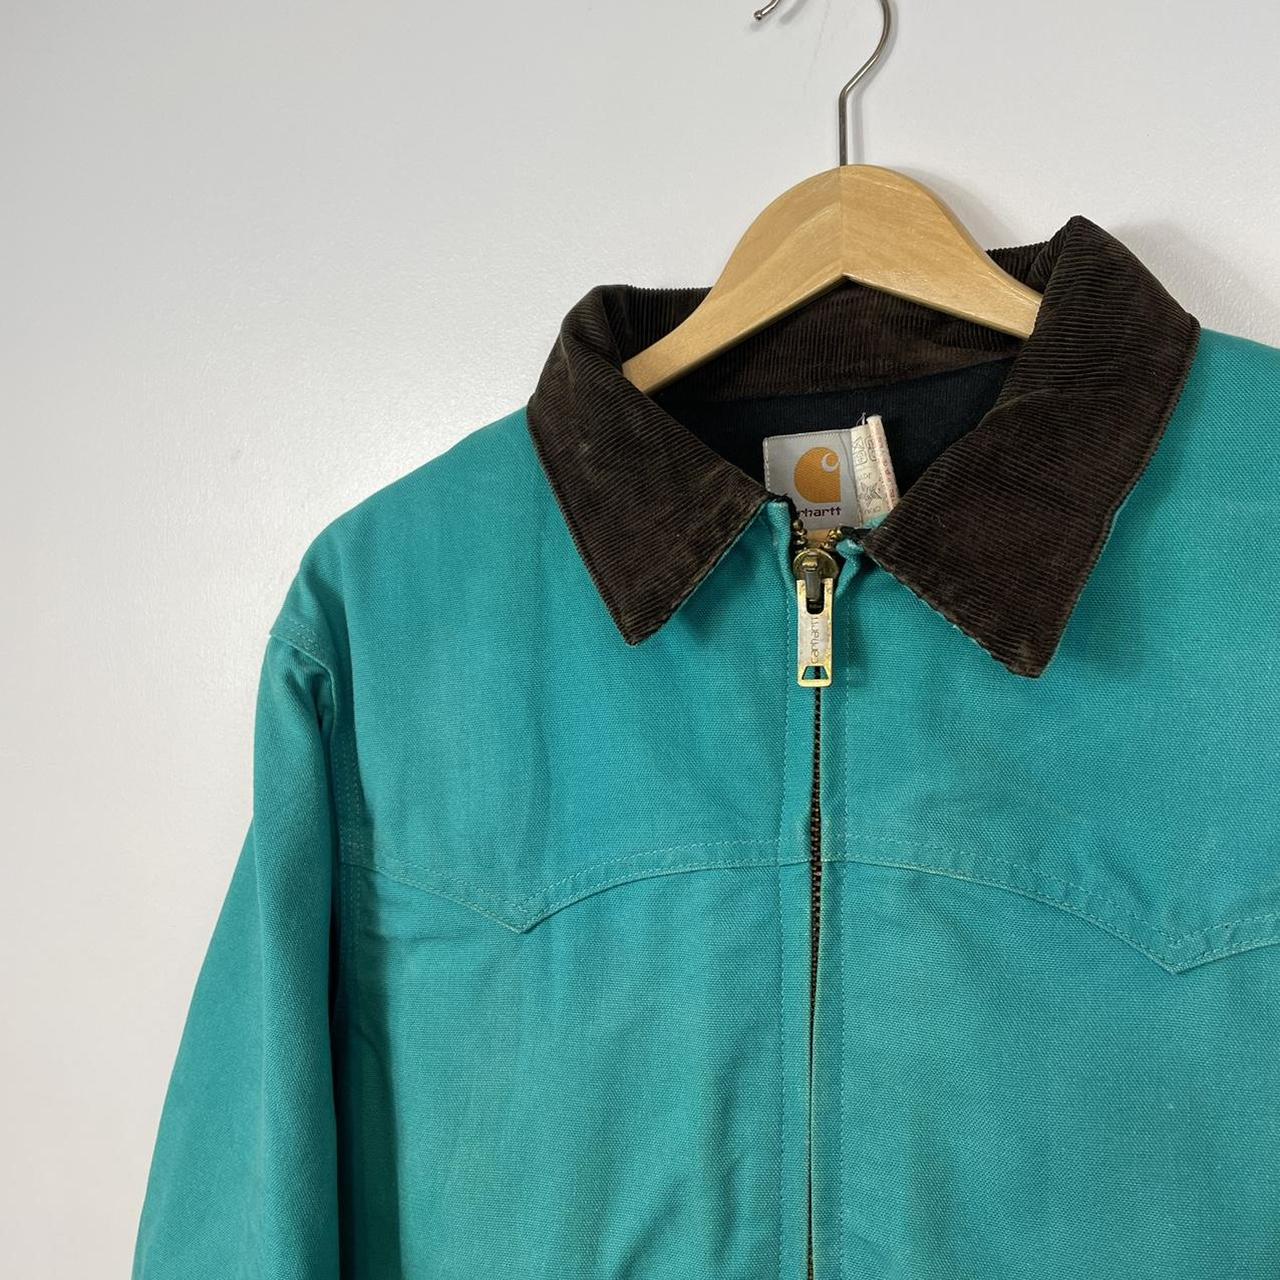 Vintage Carhartt Jacket, Green, Made in USA, Cord... - Depop